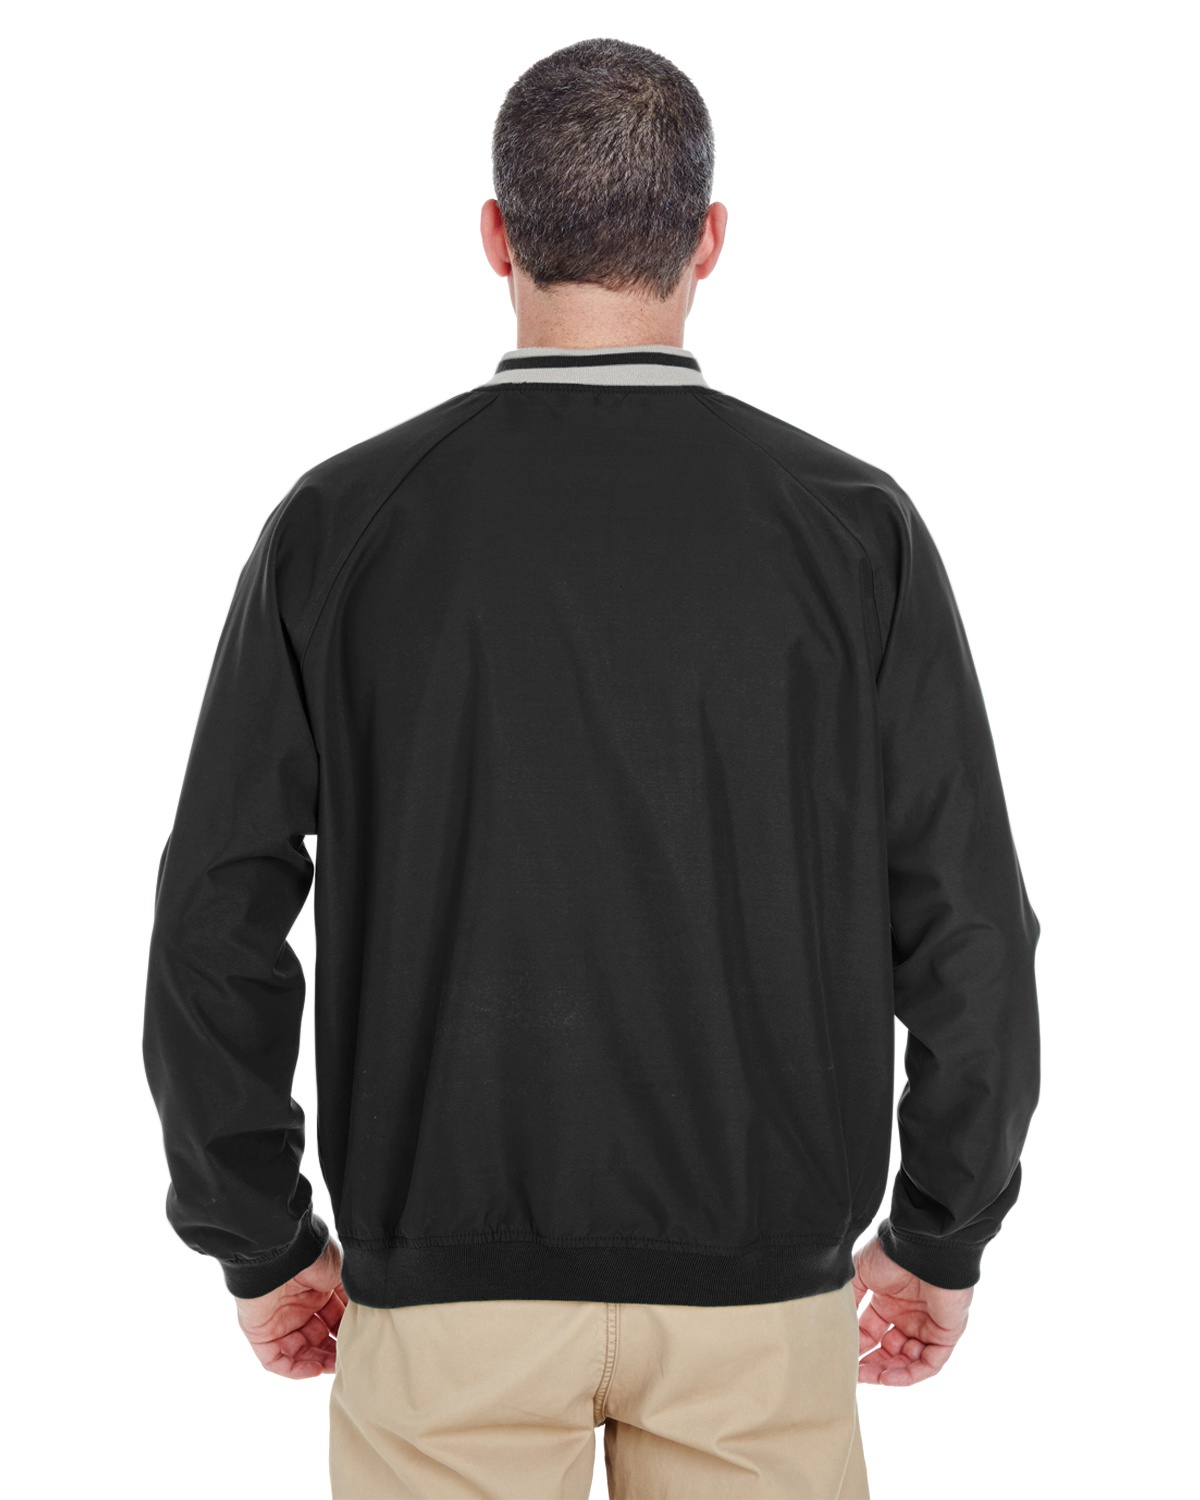 'UltraClub 8926 Adult Long-Sleeve Microfiber Crossover V-Neck Wind Shirt'